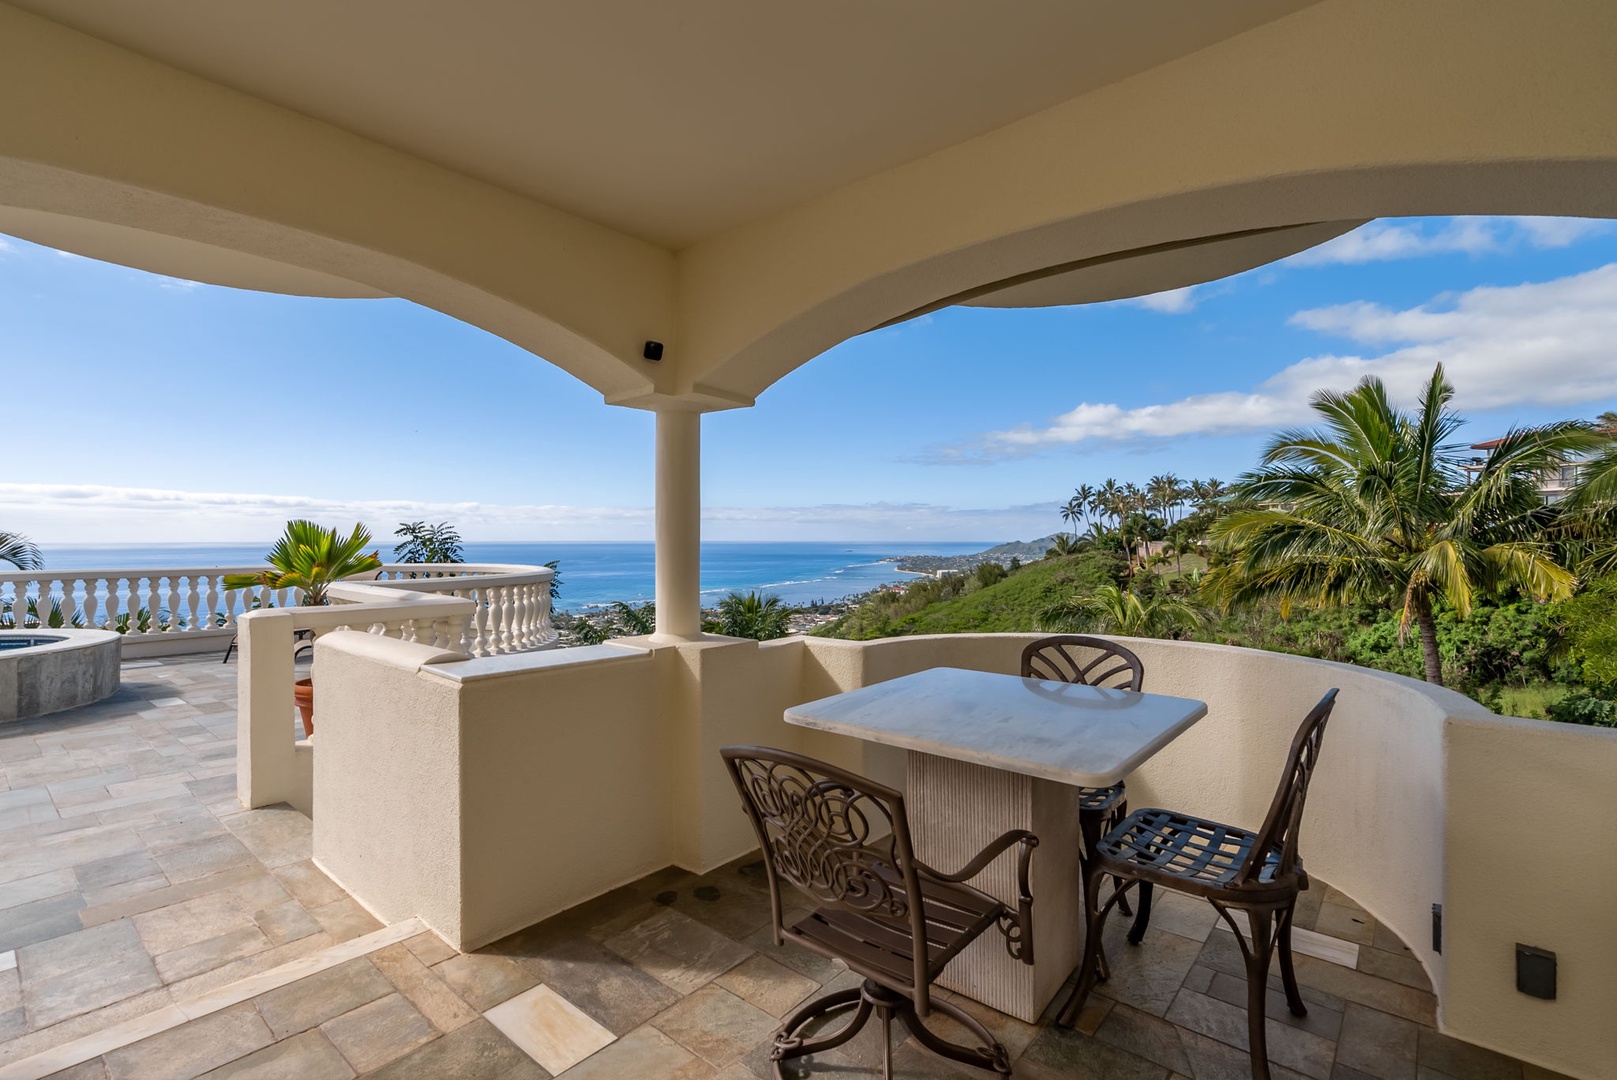 Honolulu Vacation Rentals, Hawaii Ridge Getaway - Private deck overlooking partial ocean views.